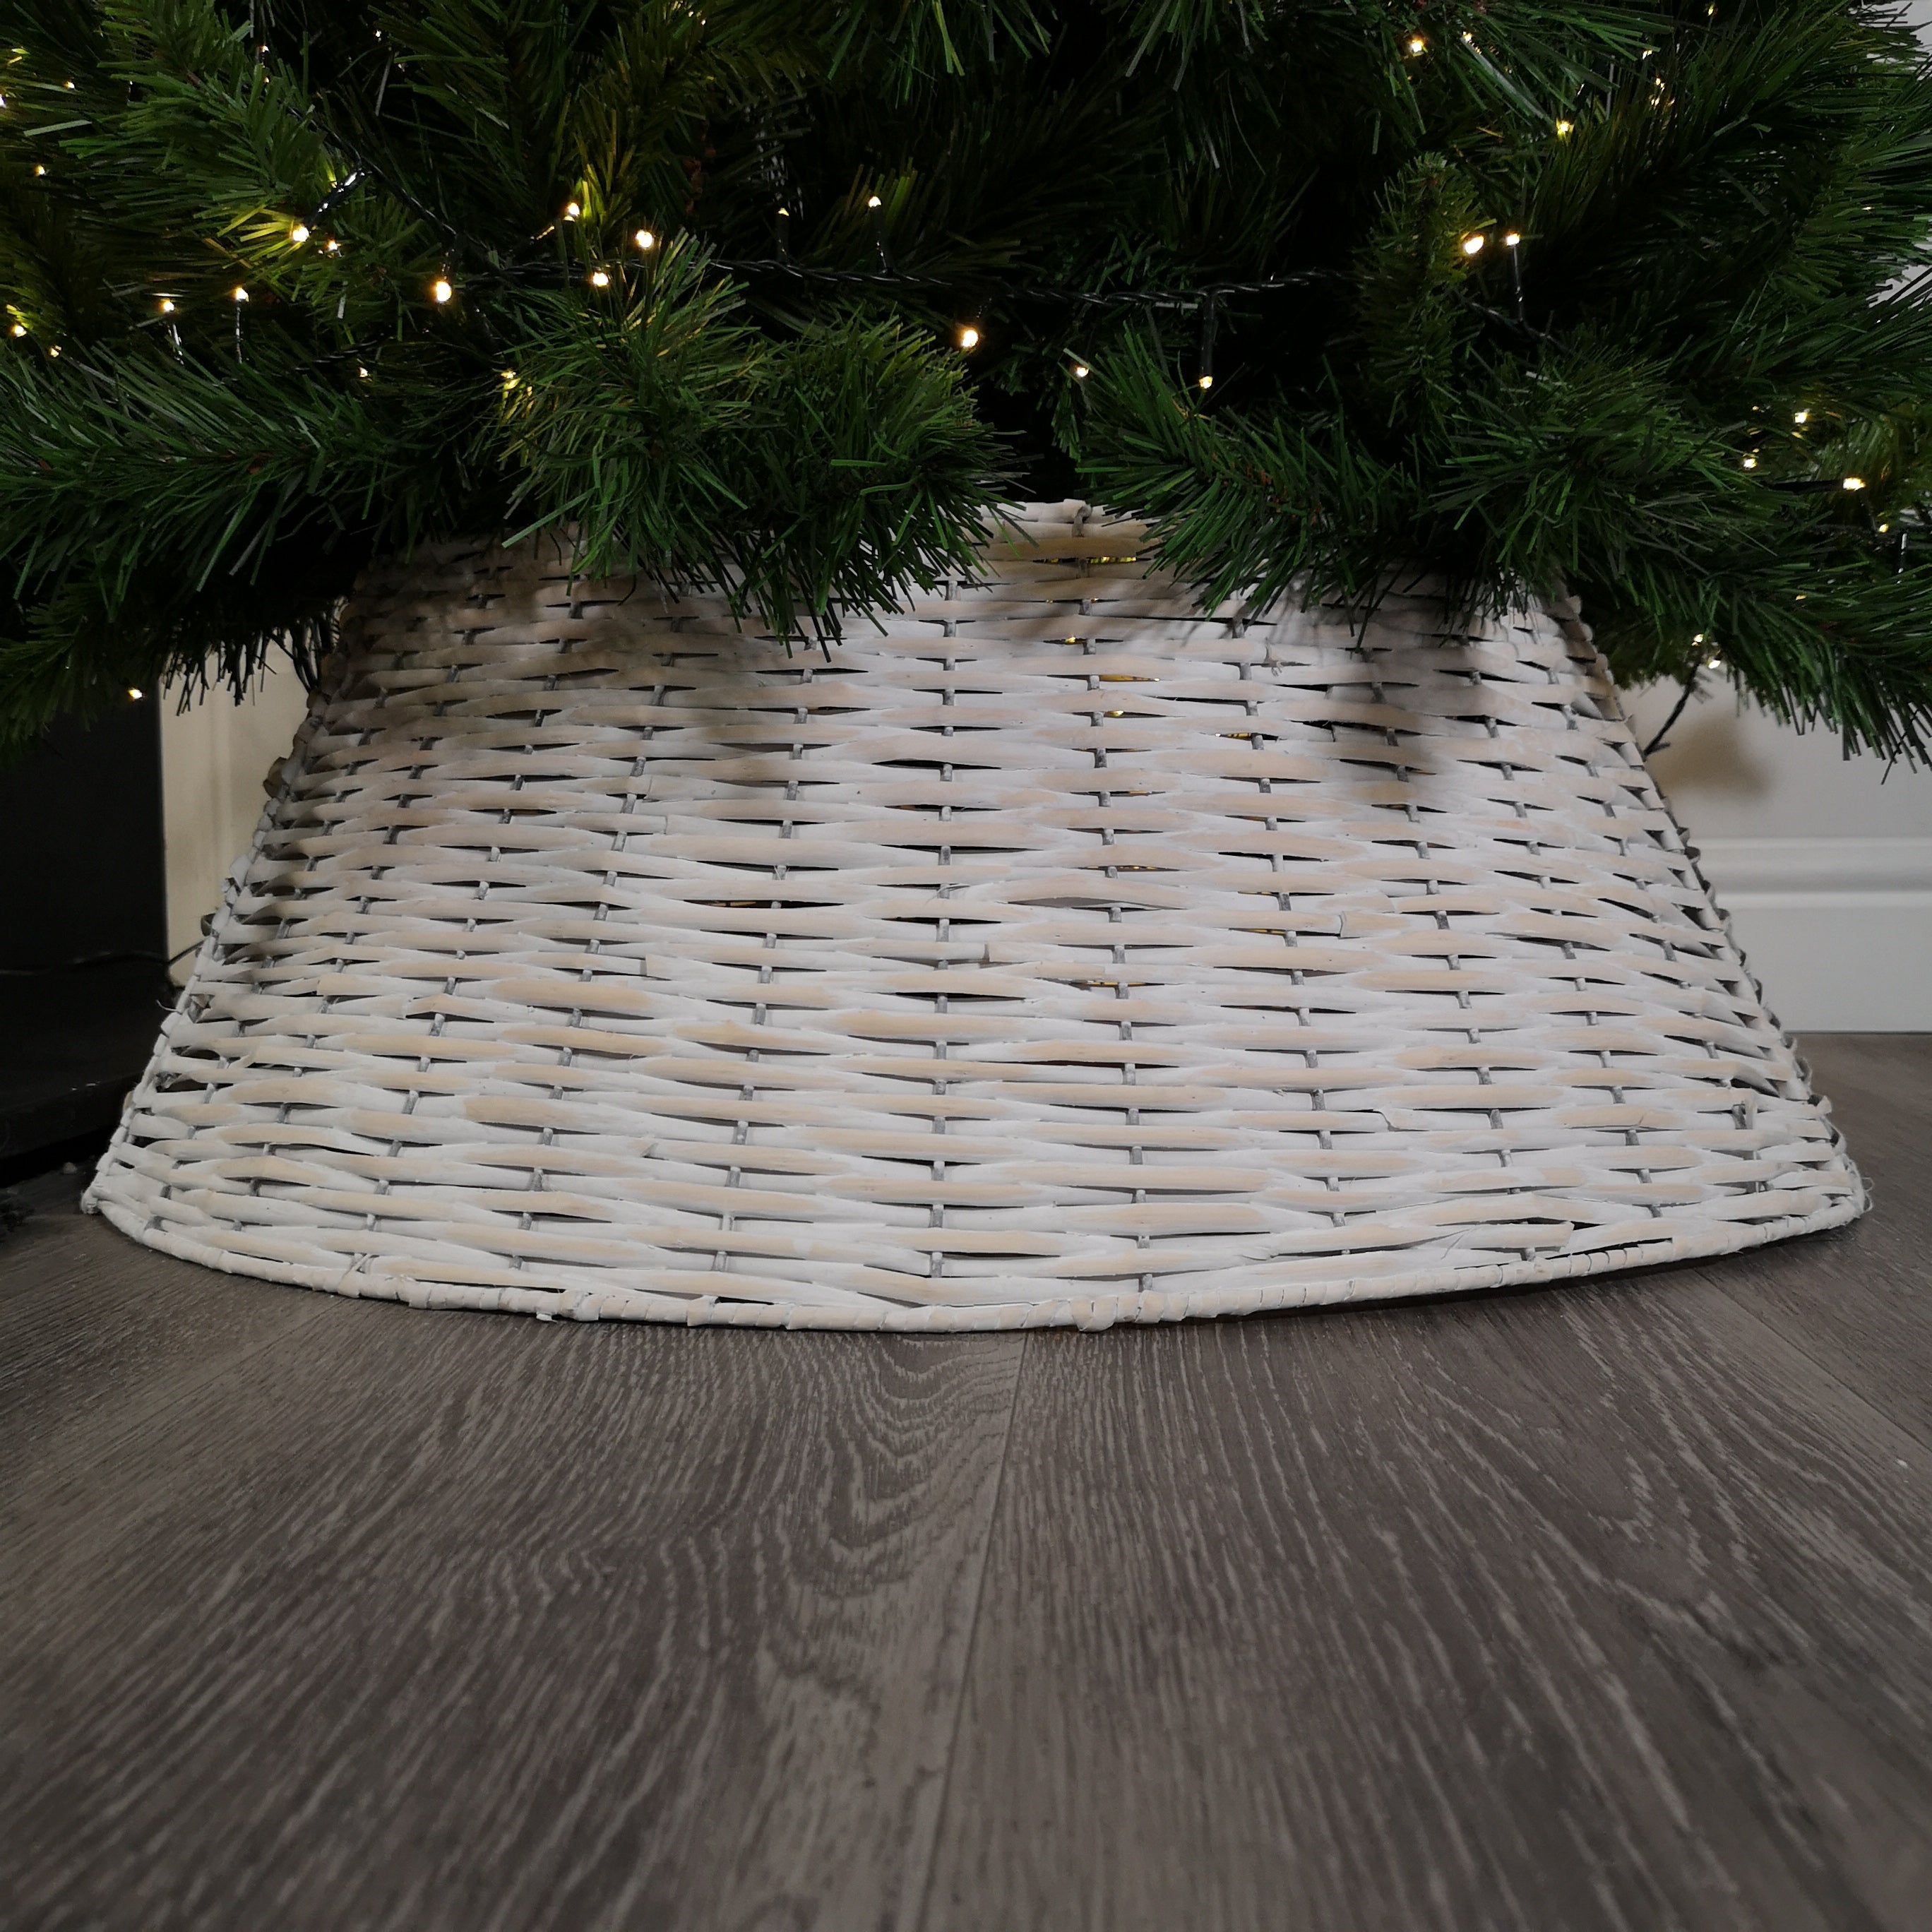 40/58cm Samuel Alexander KD Willow Christmas Tree Skirt Wicker Rattan- Medium White Wash